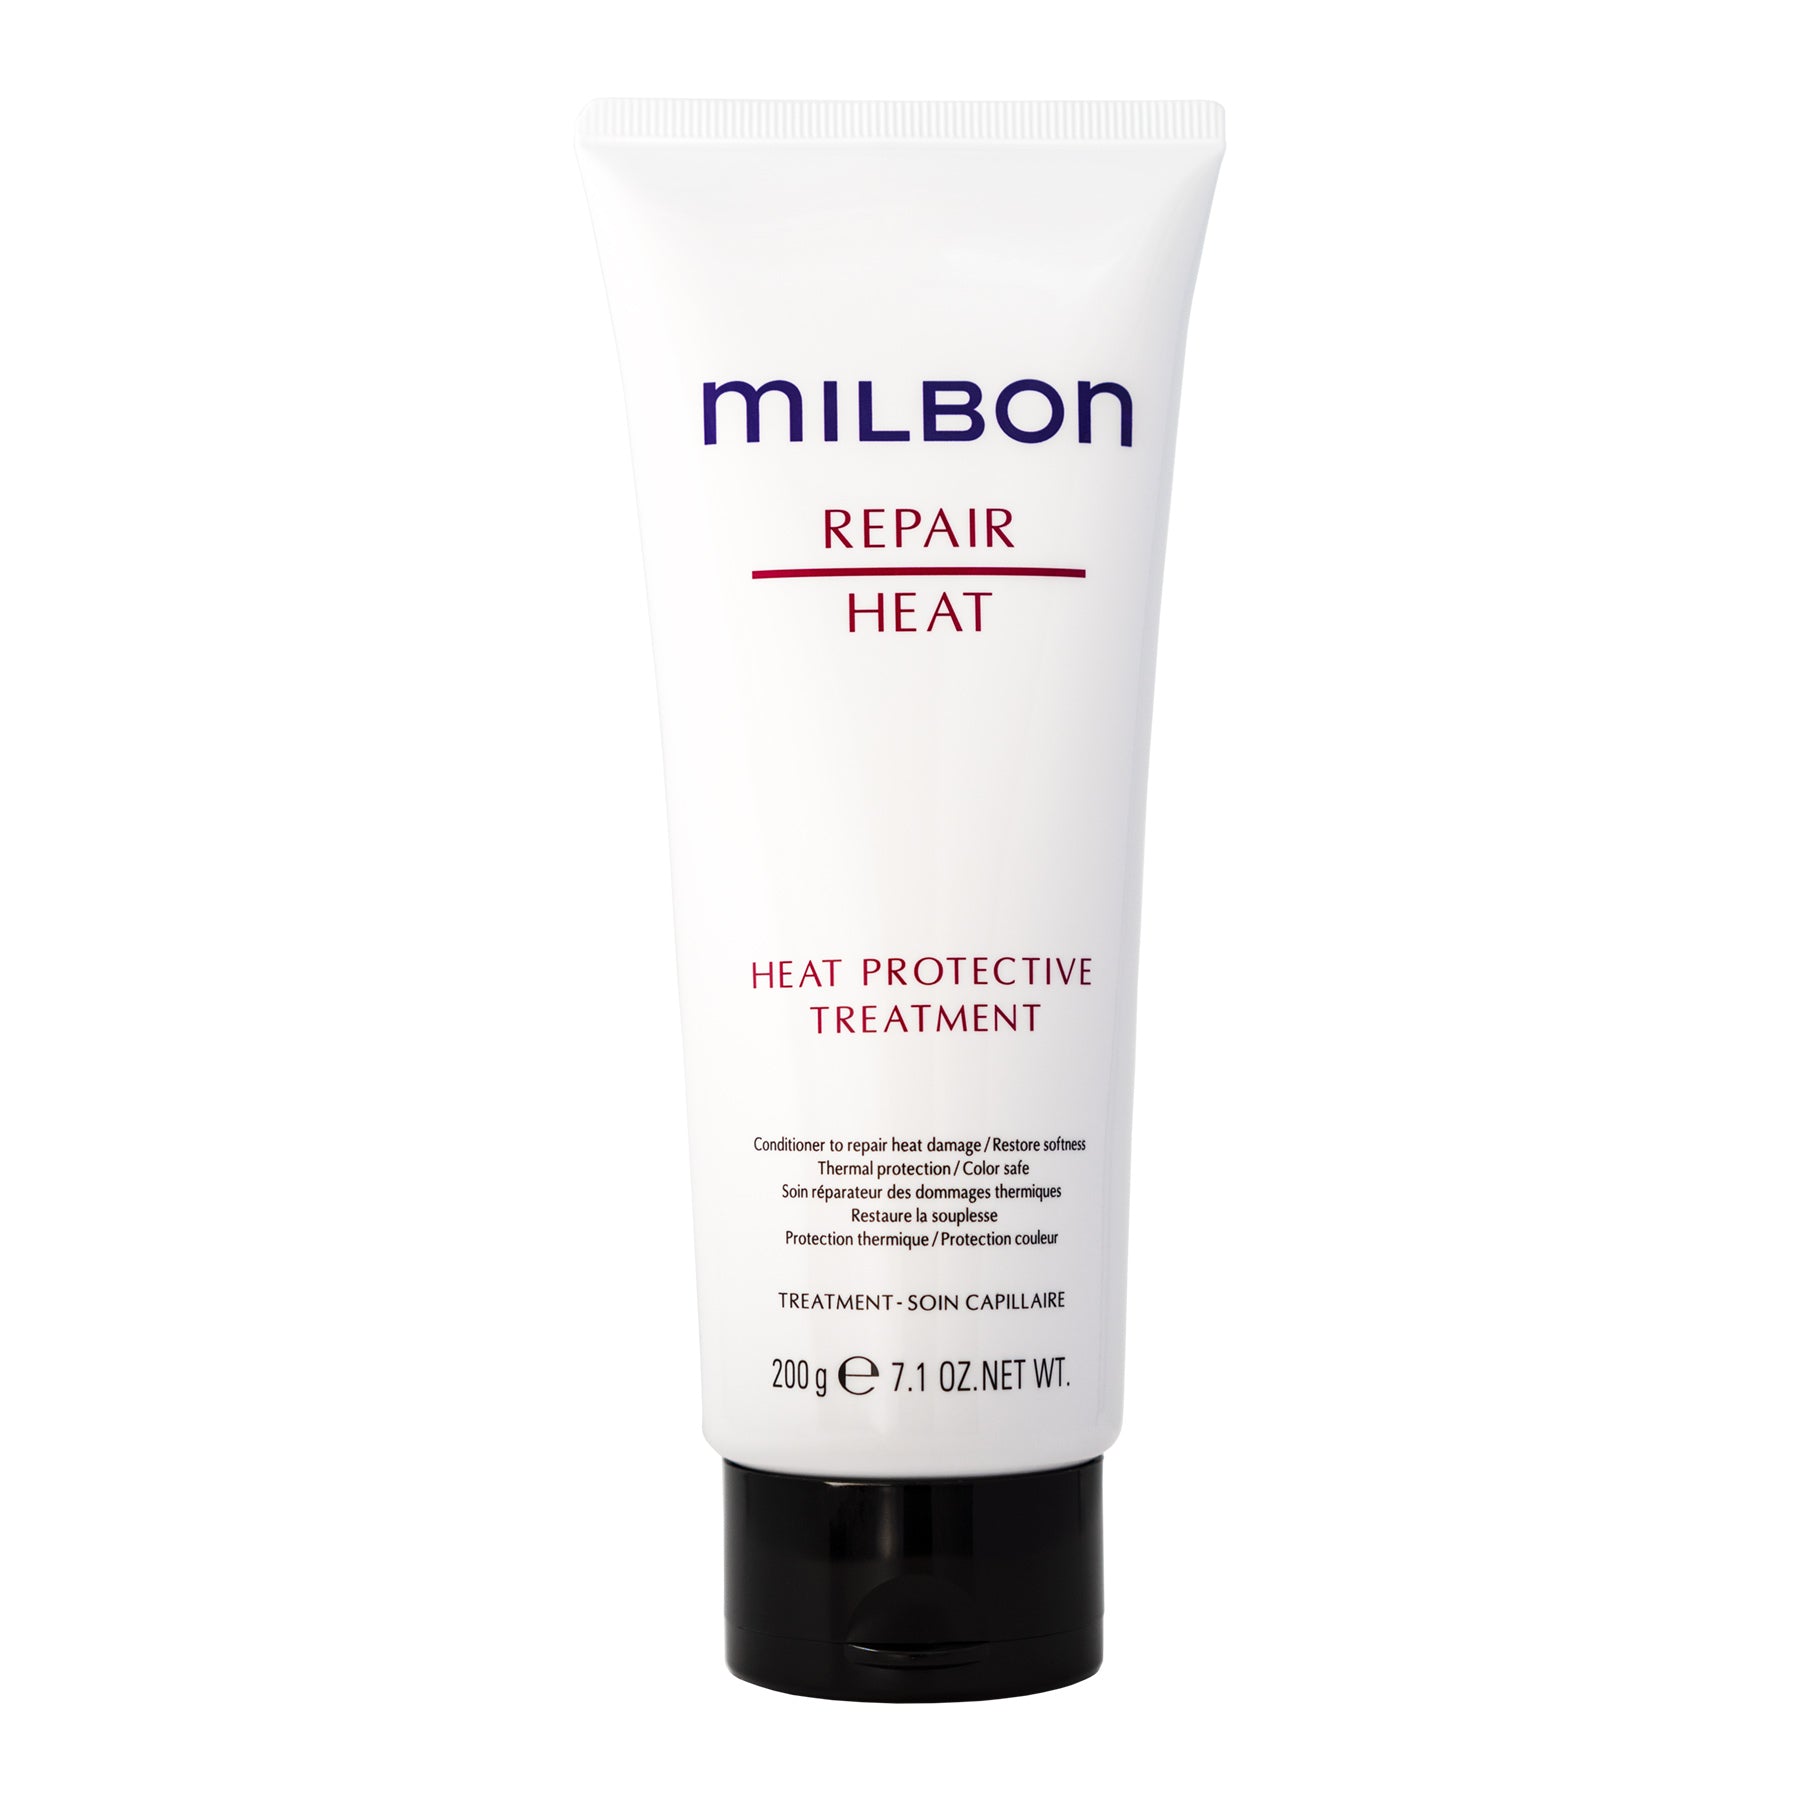 Milbon Repair Heat Protective Treatment